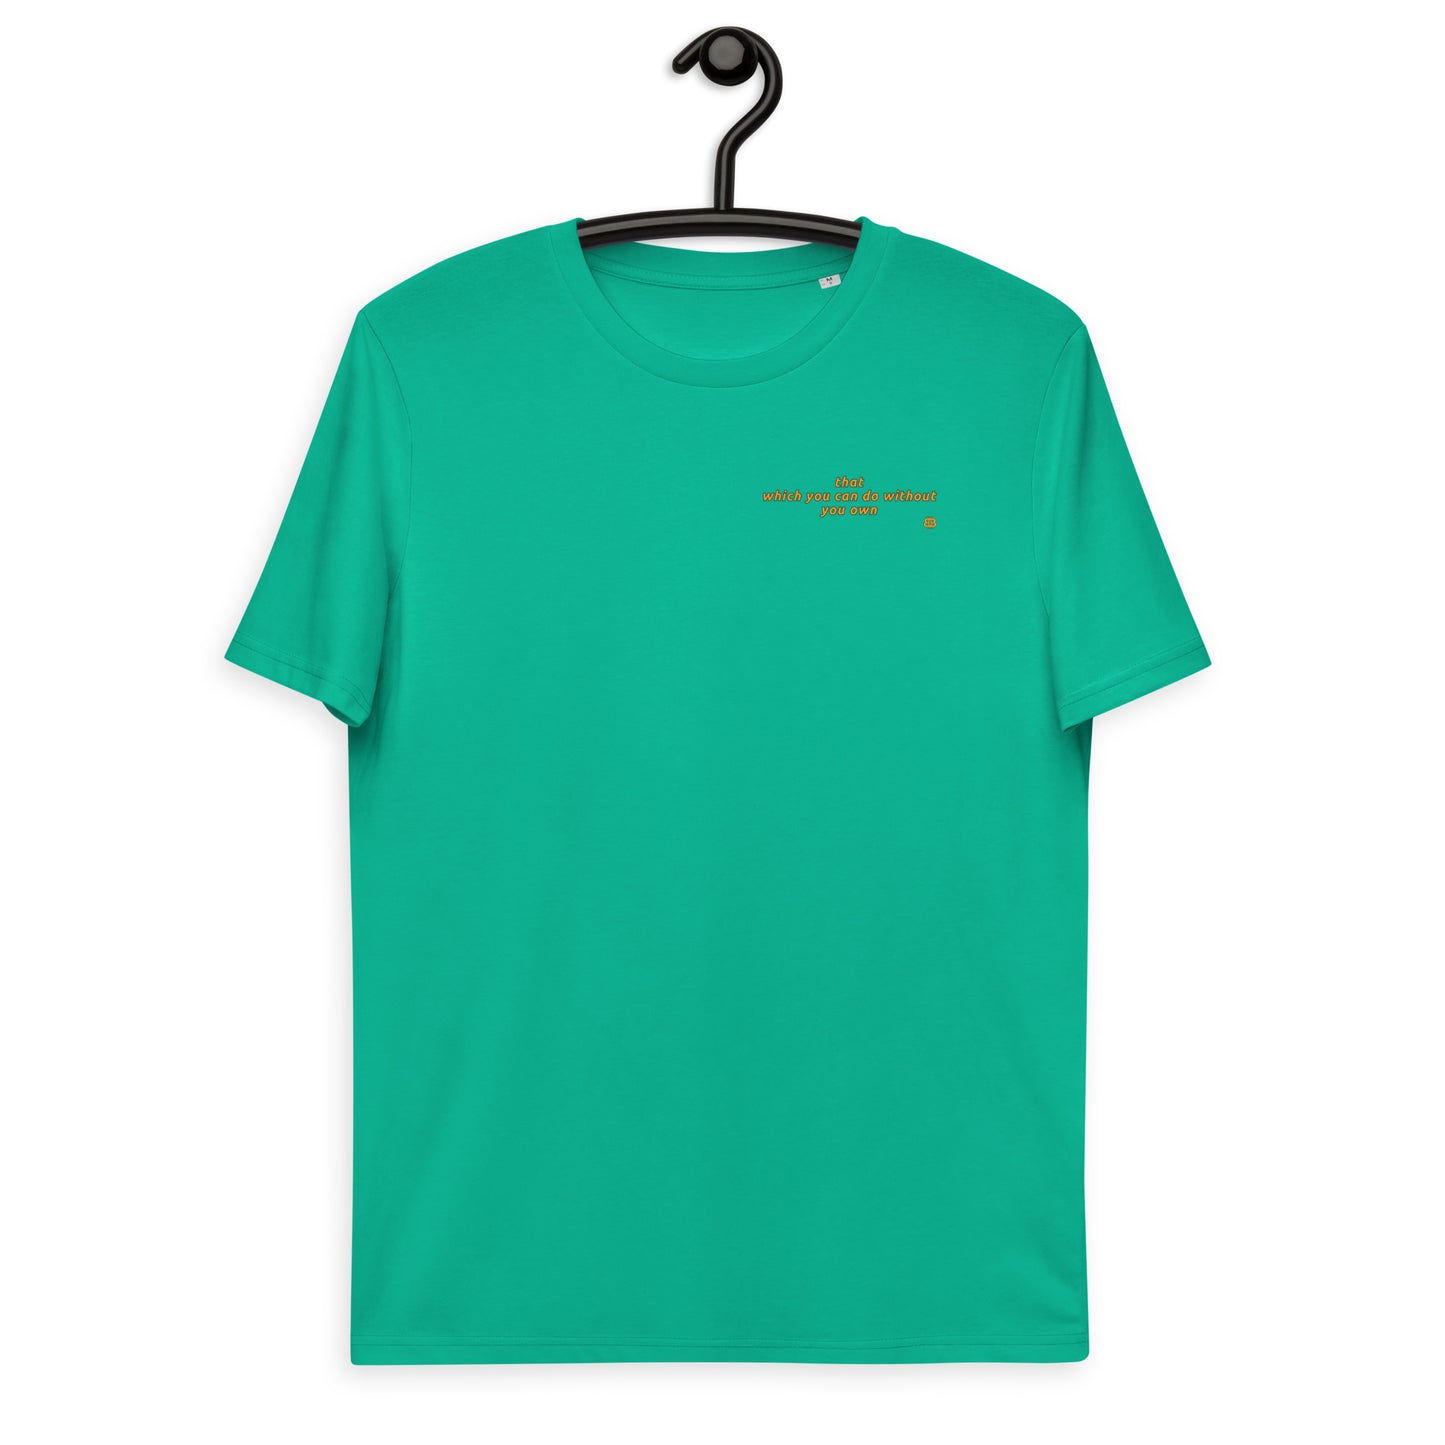 Camiseta unisex de algodón orgánico "Own_sm"